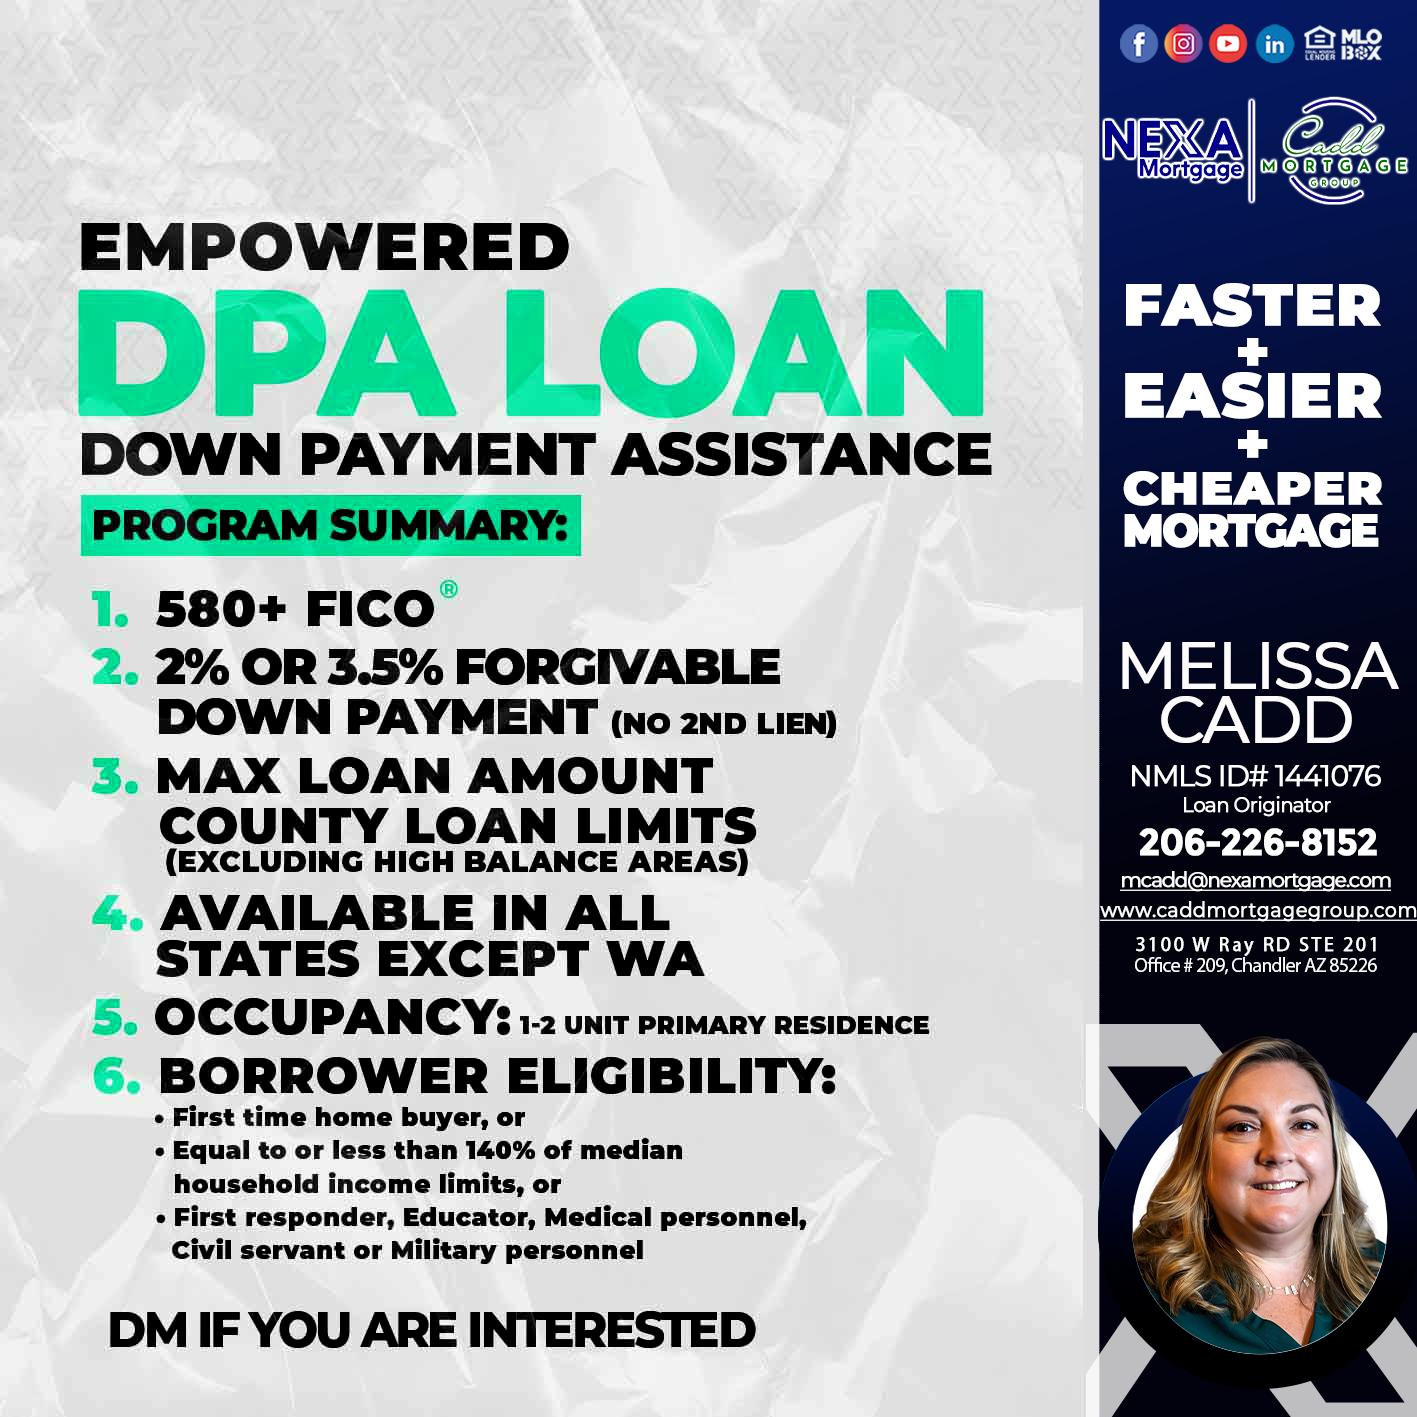 dpa loan - Melissa Cadd -Loan Originator